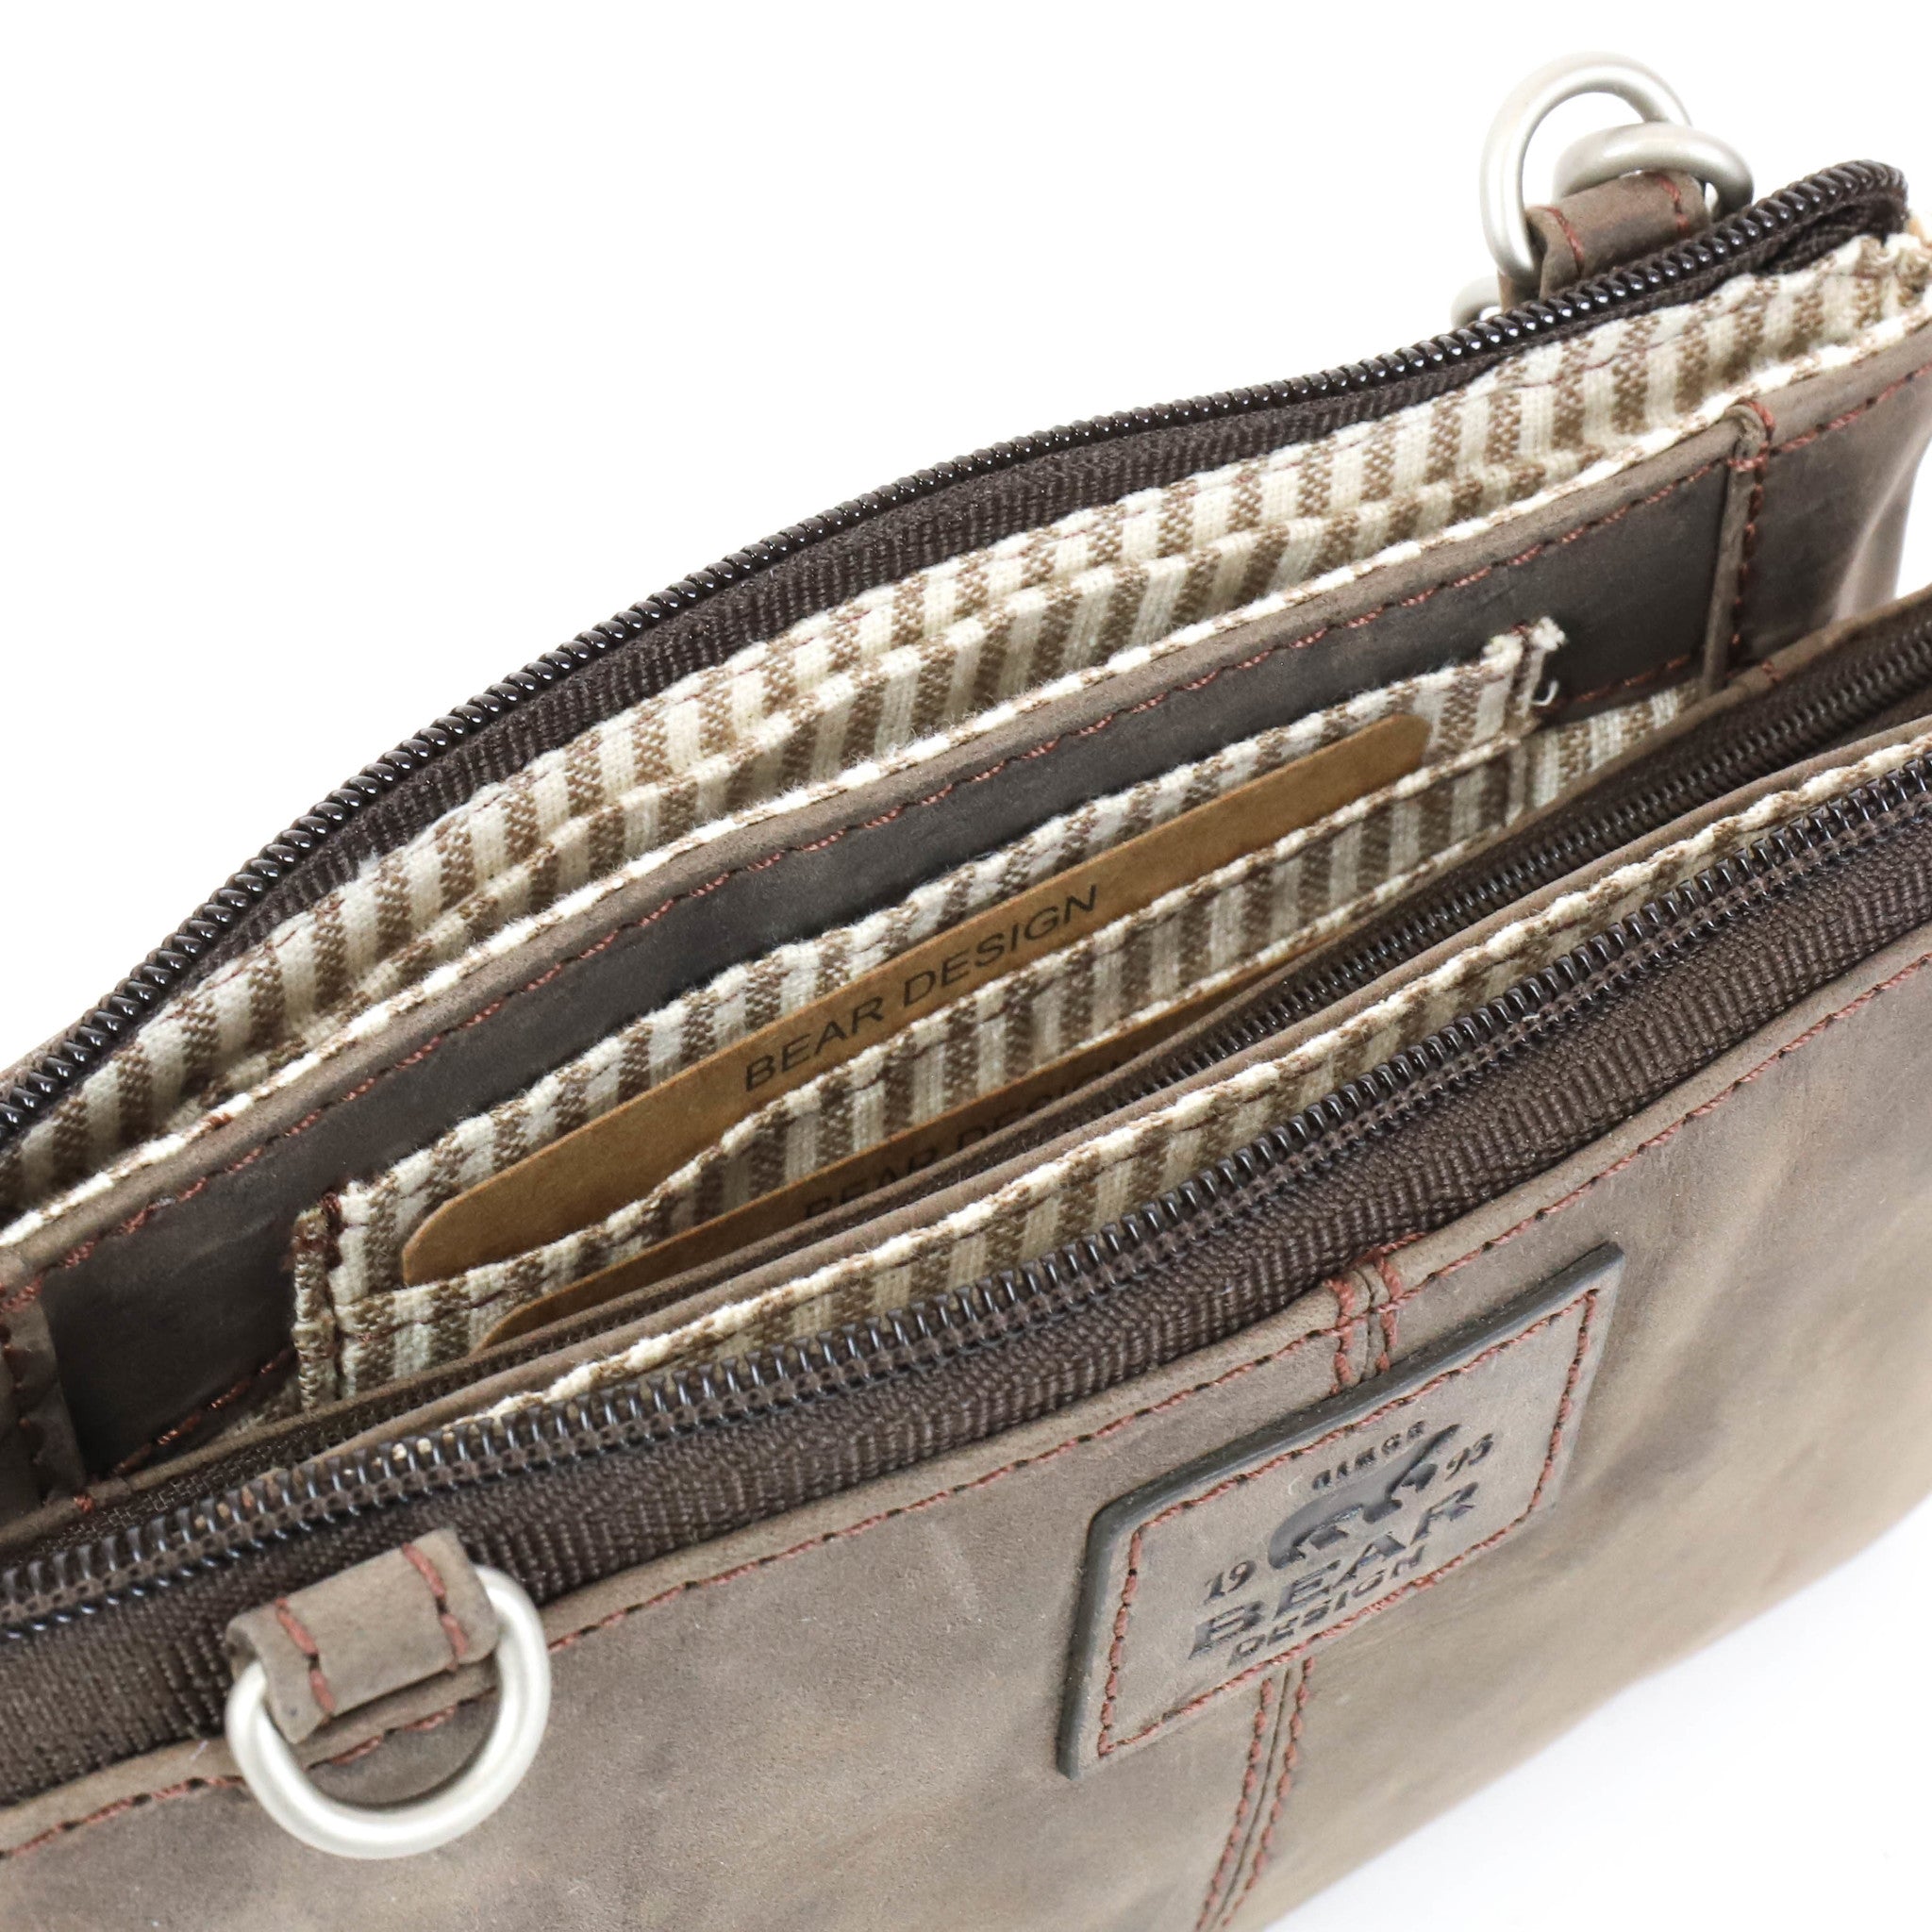 Wallet bag 'Umi' brown - HD 36799